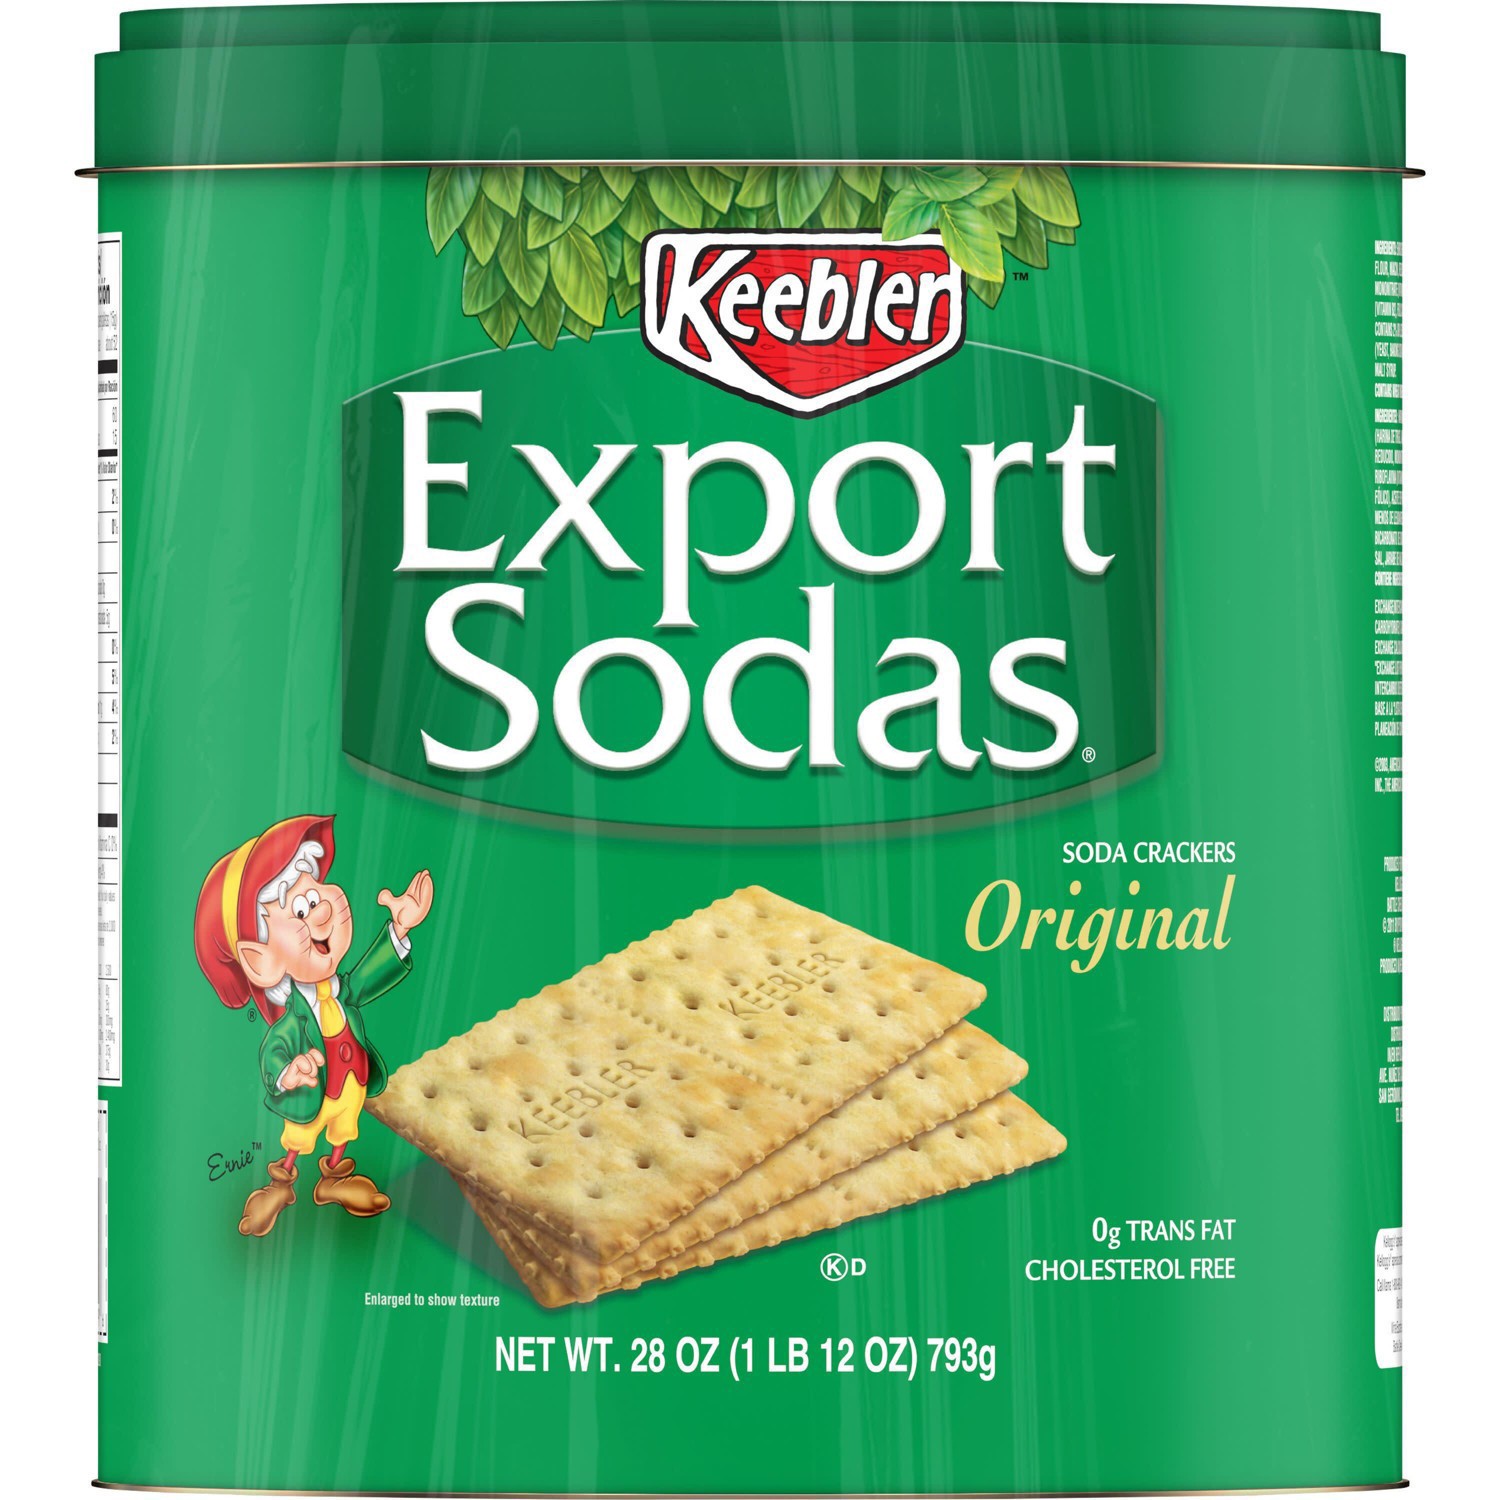 slide 52 of 63, Keebler Export Sodas Soda Crackers, Original, 28 oz, 28 oz